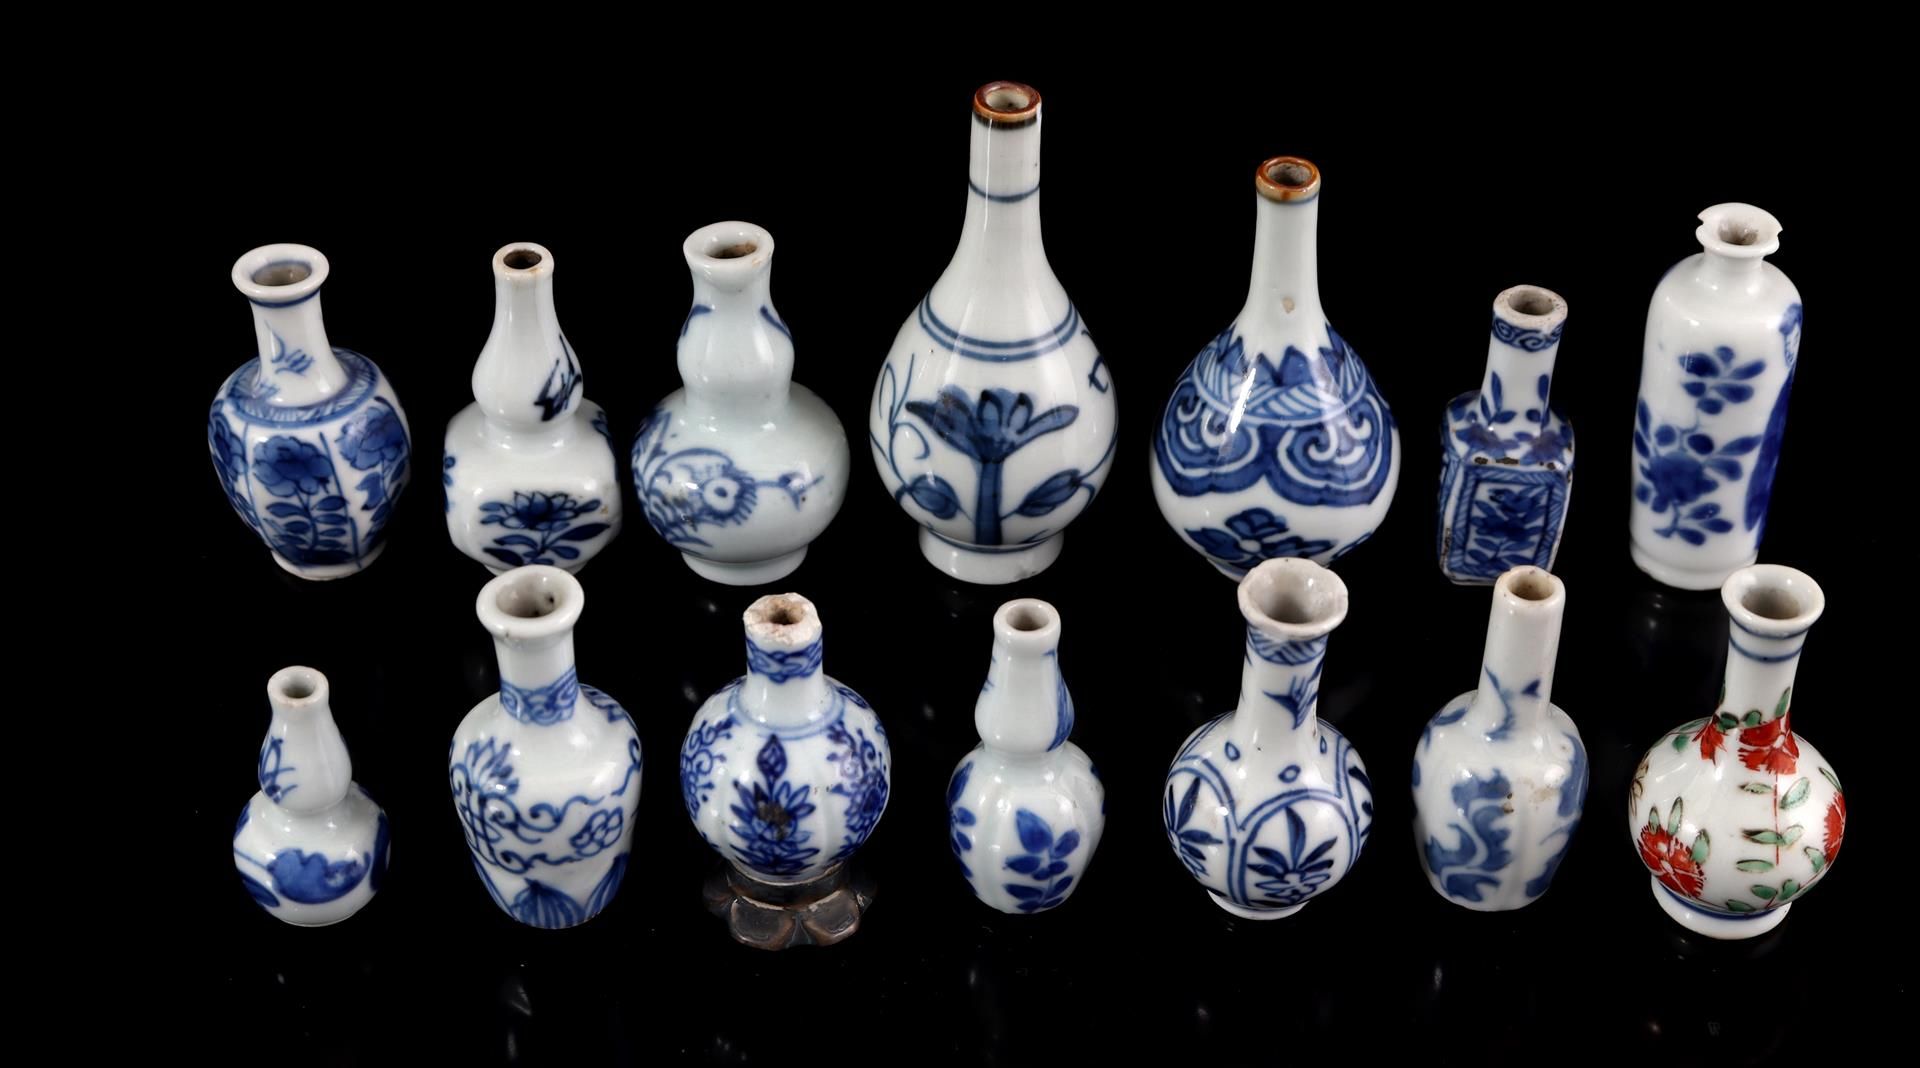 14 porcelain miniature vases, 17th/18th